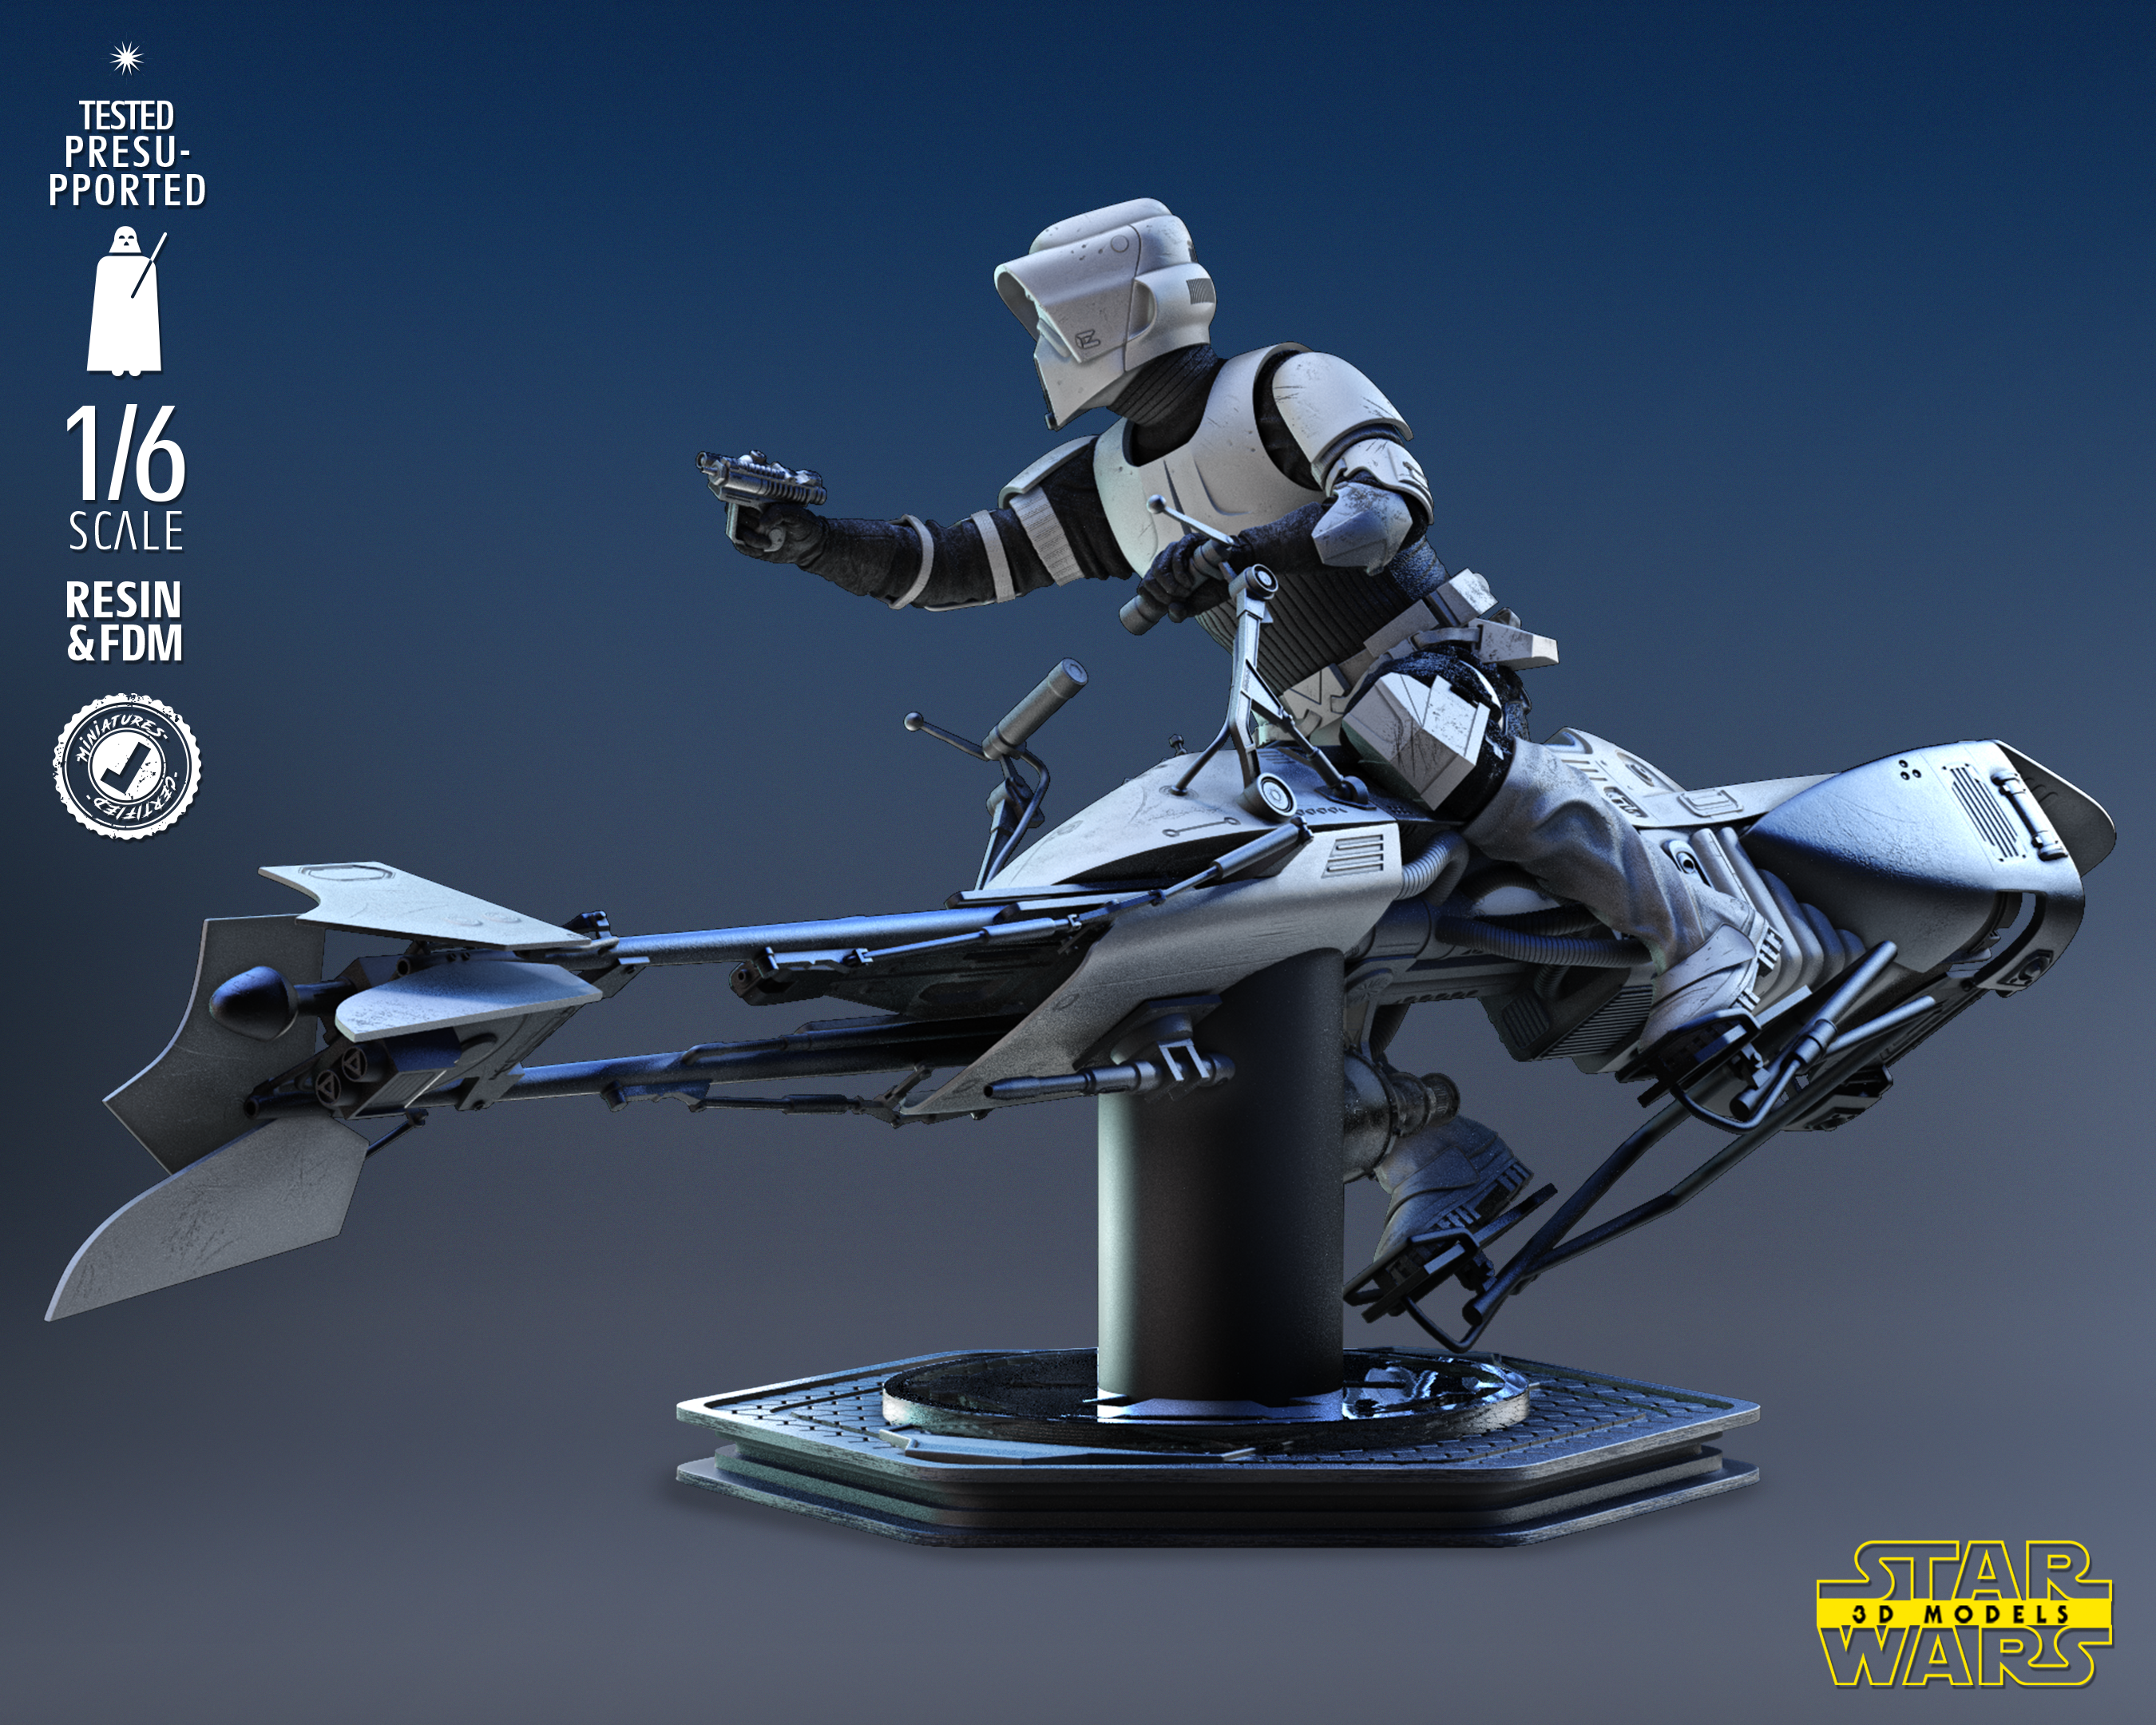 Storm Trooper Explorer Sculpture (Fan Art) - 1:6 or 1:12 Scale (285mm or 142mm) - 3D Printed